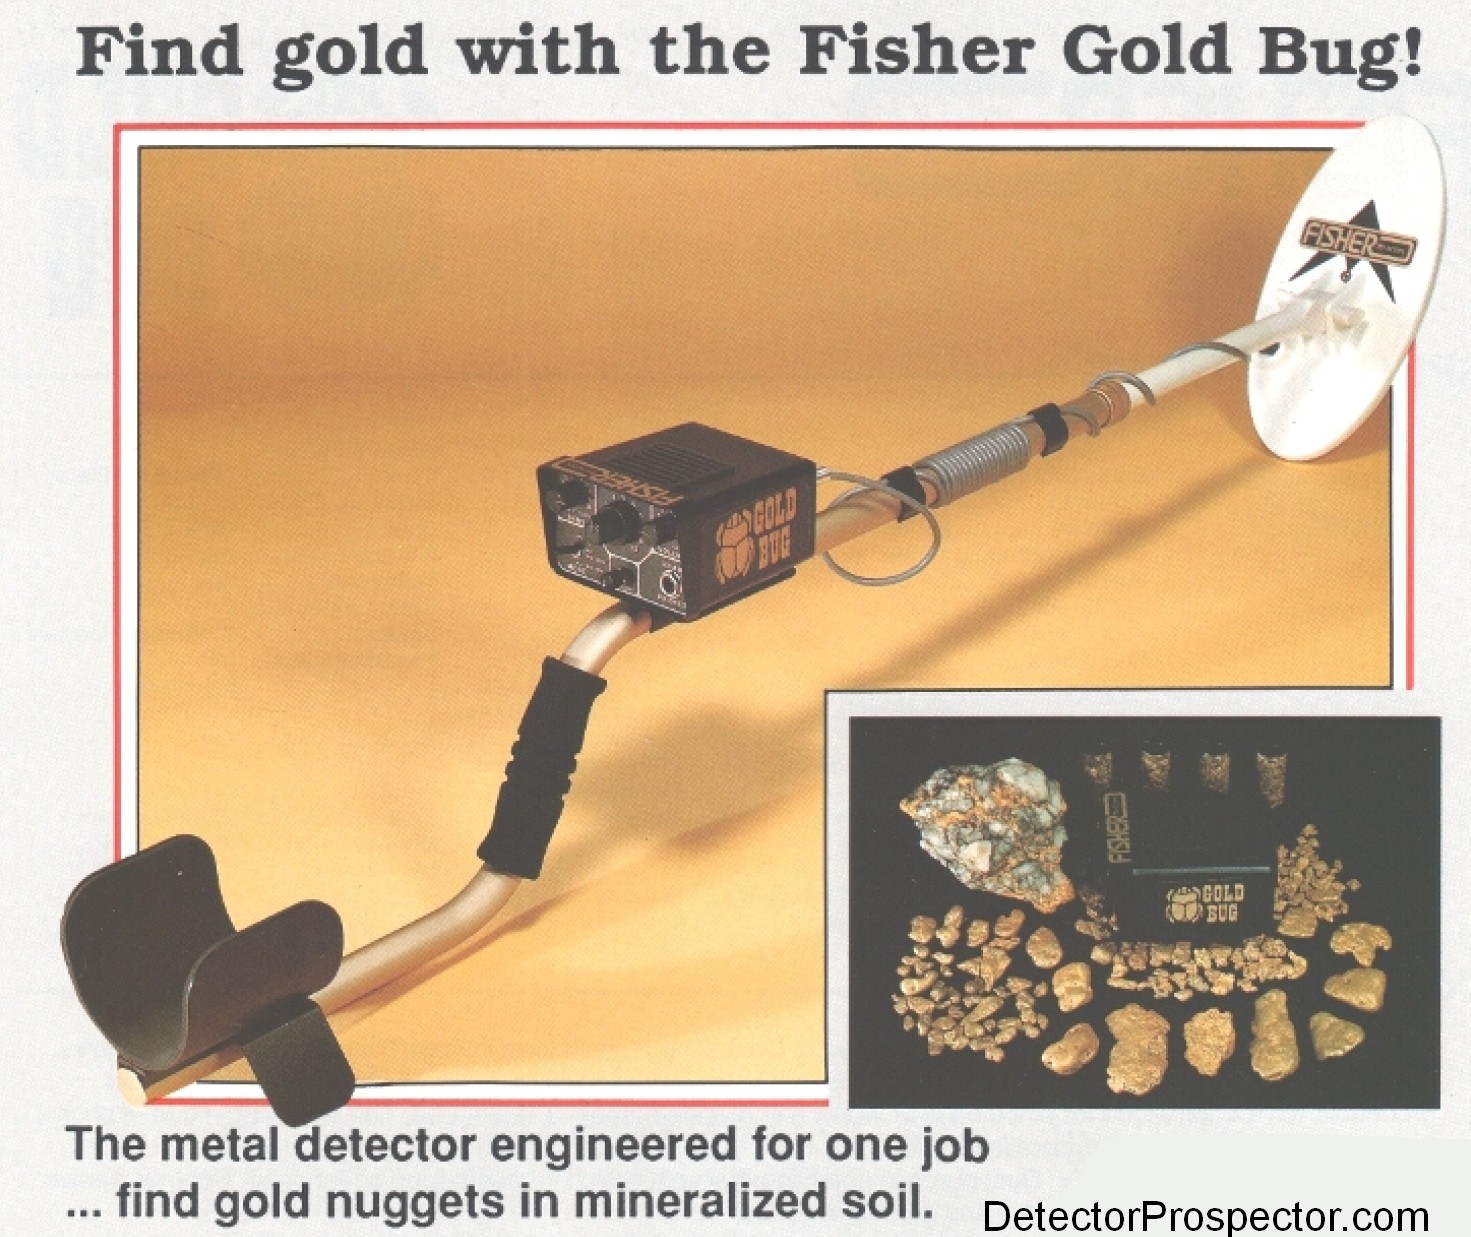 fisher-gold-bug-ad-bud-guthrie-montana-gold.jpg